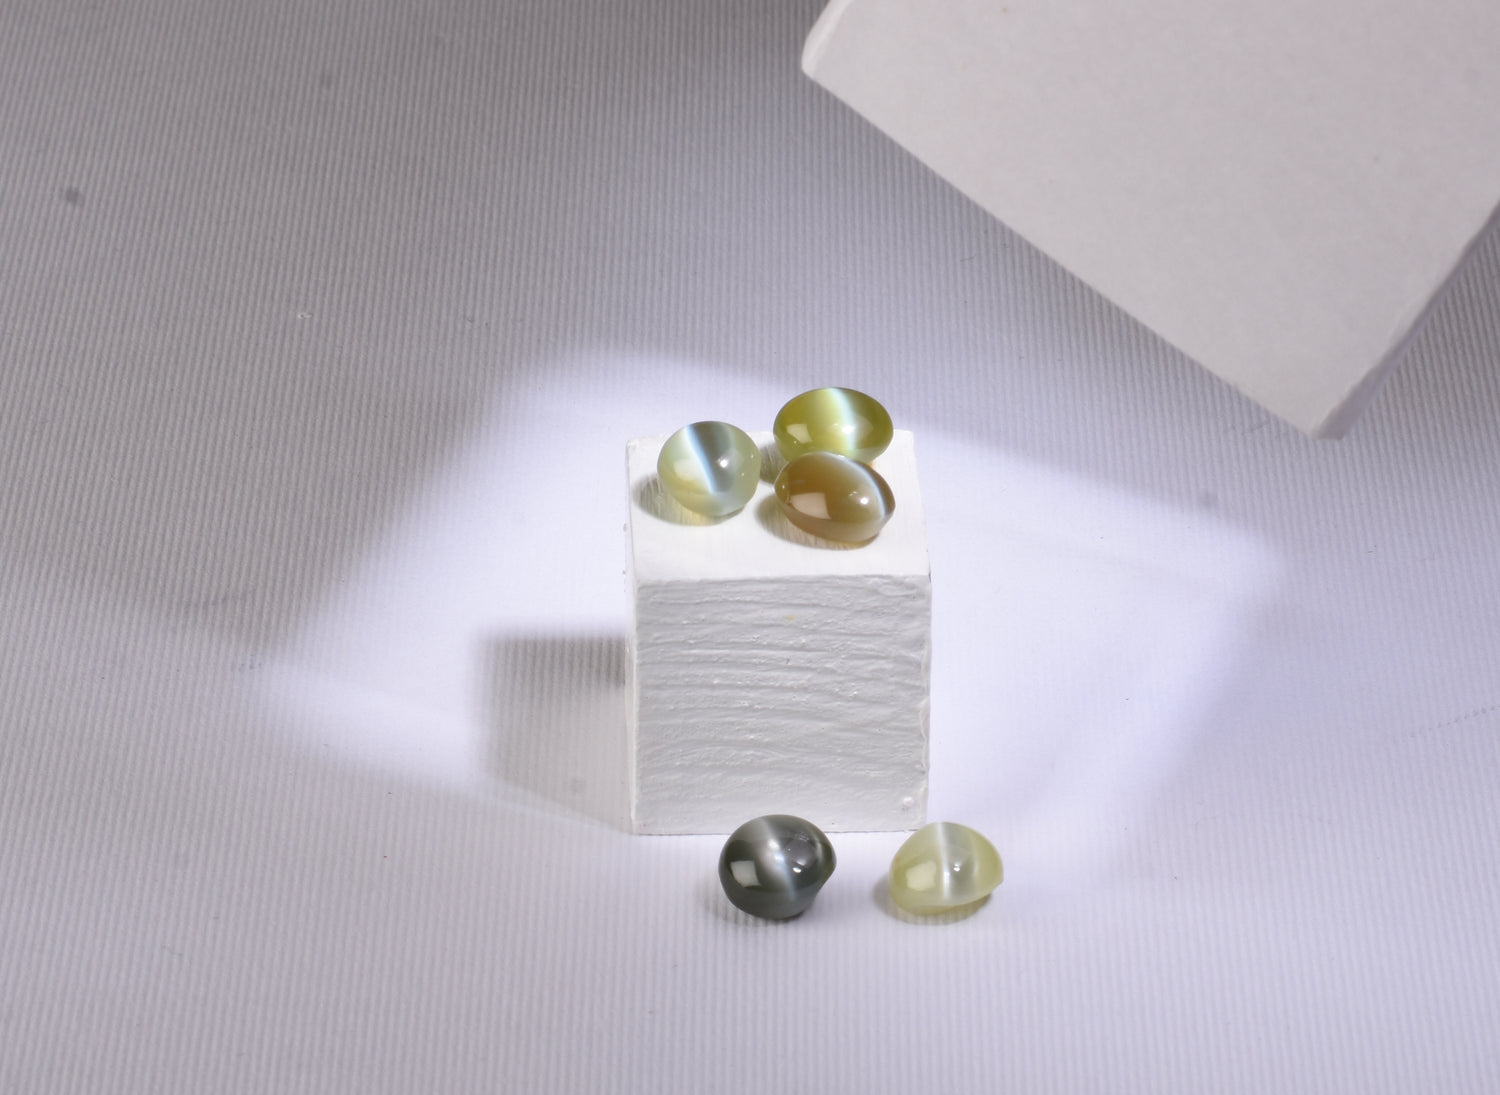 chrysoberyl cat's eye stones on a white cube